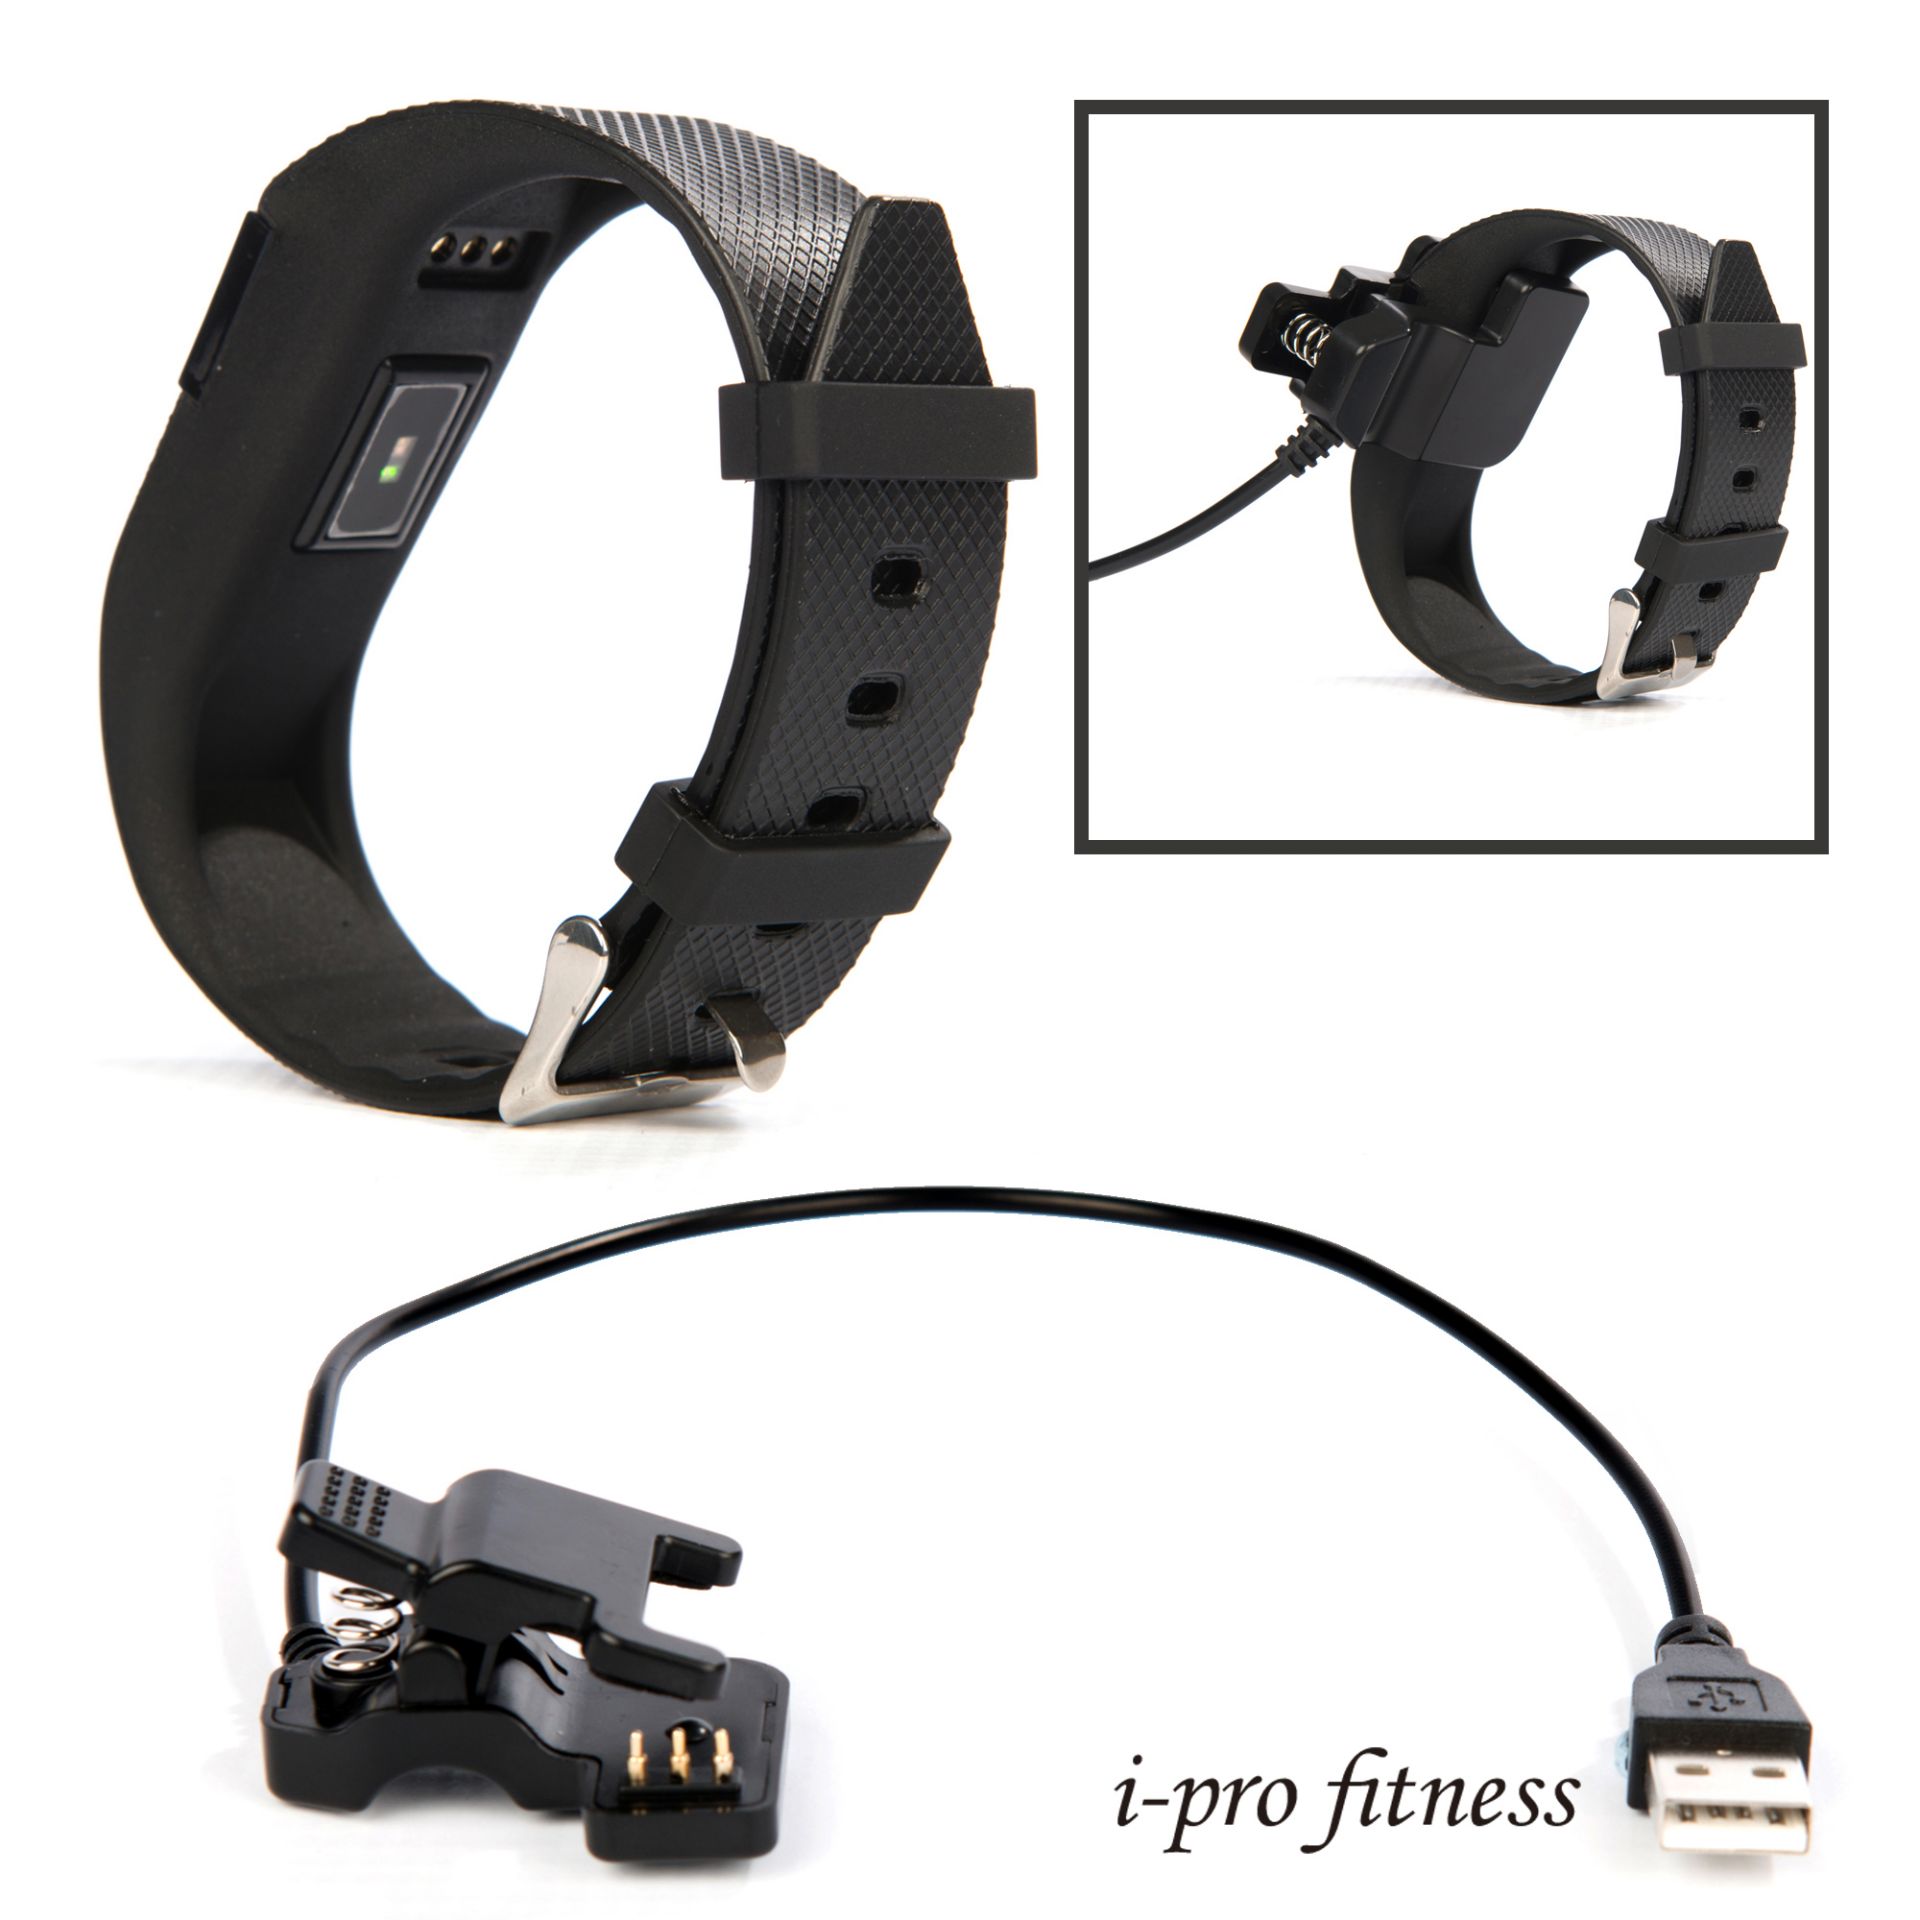 20x Fitness Tracker i-pro fitness, Bluetooth 4.0 Sports Smart Bracelet. - Image 7 of 8